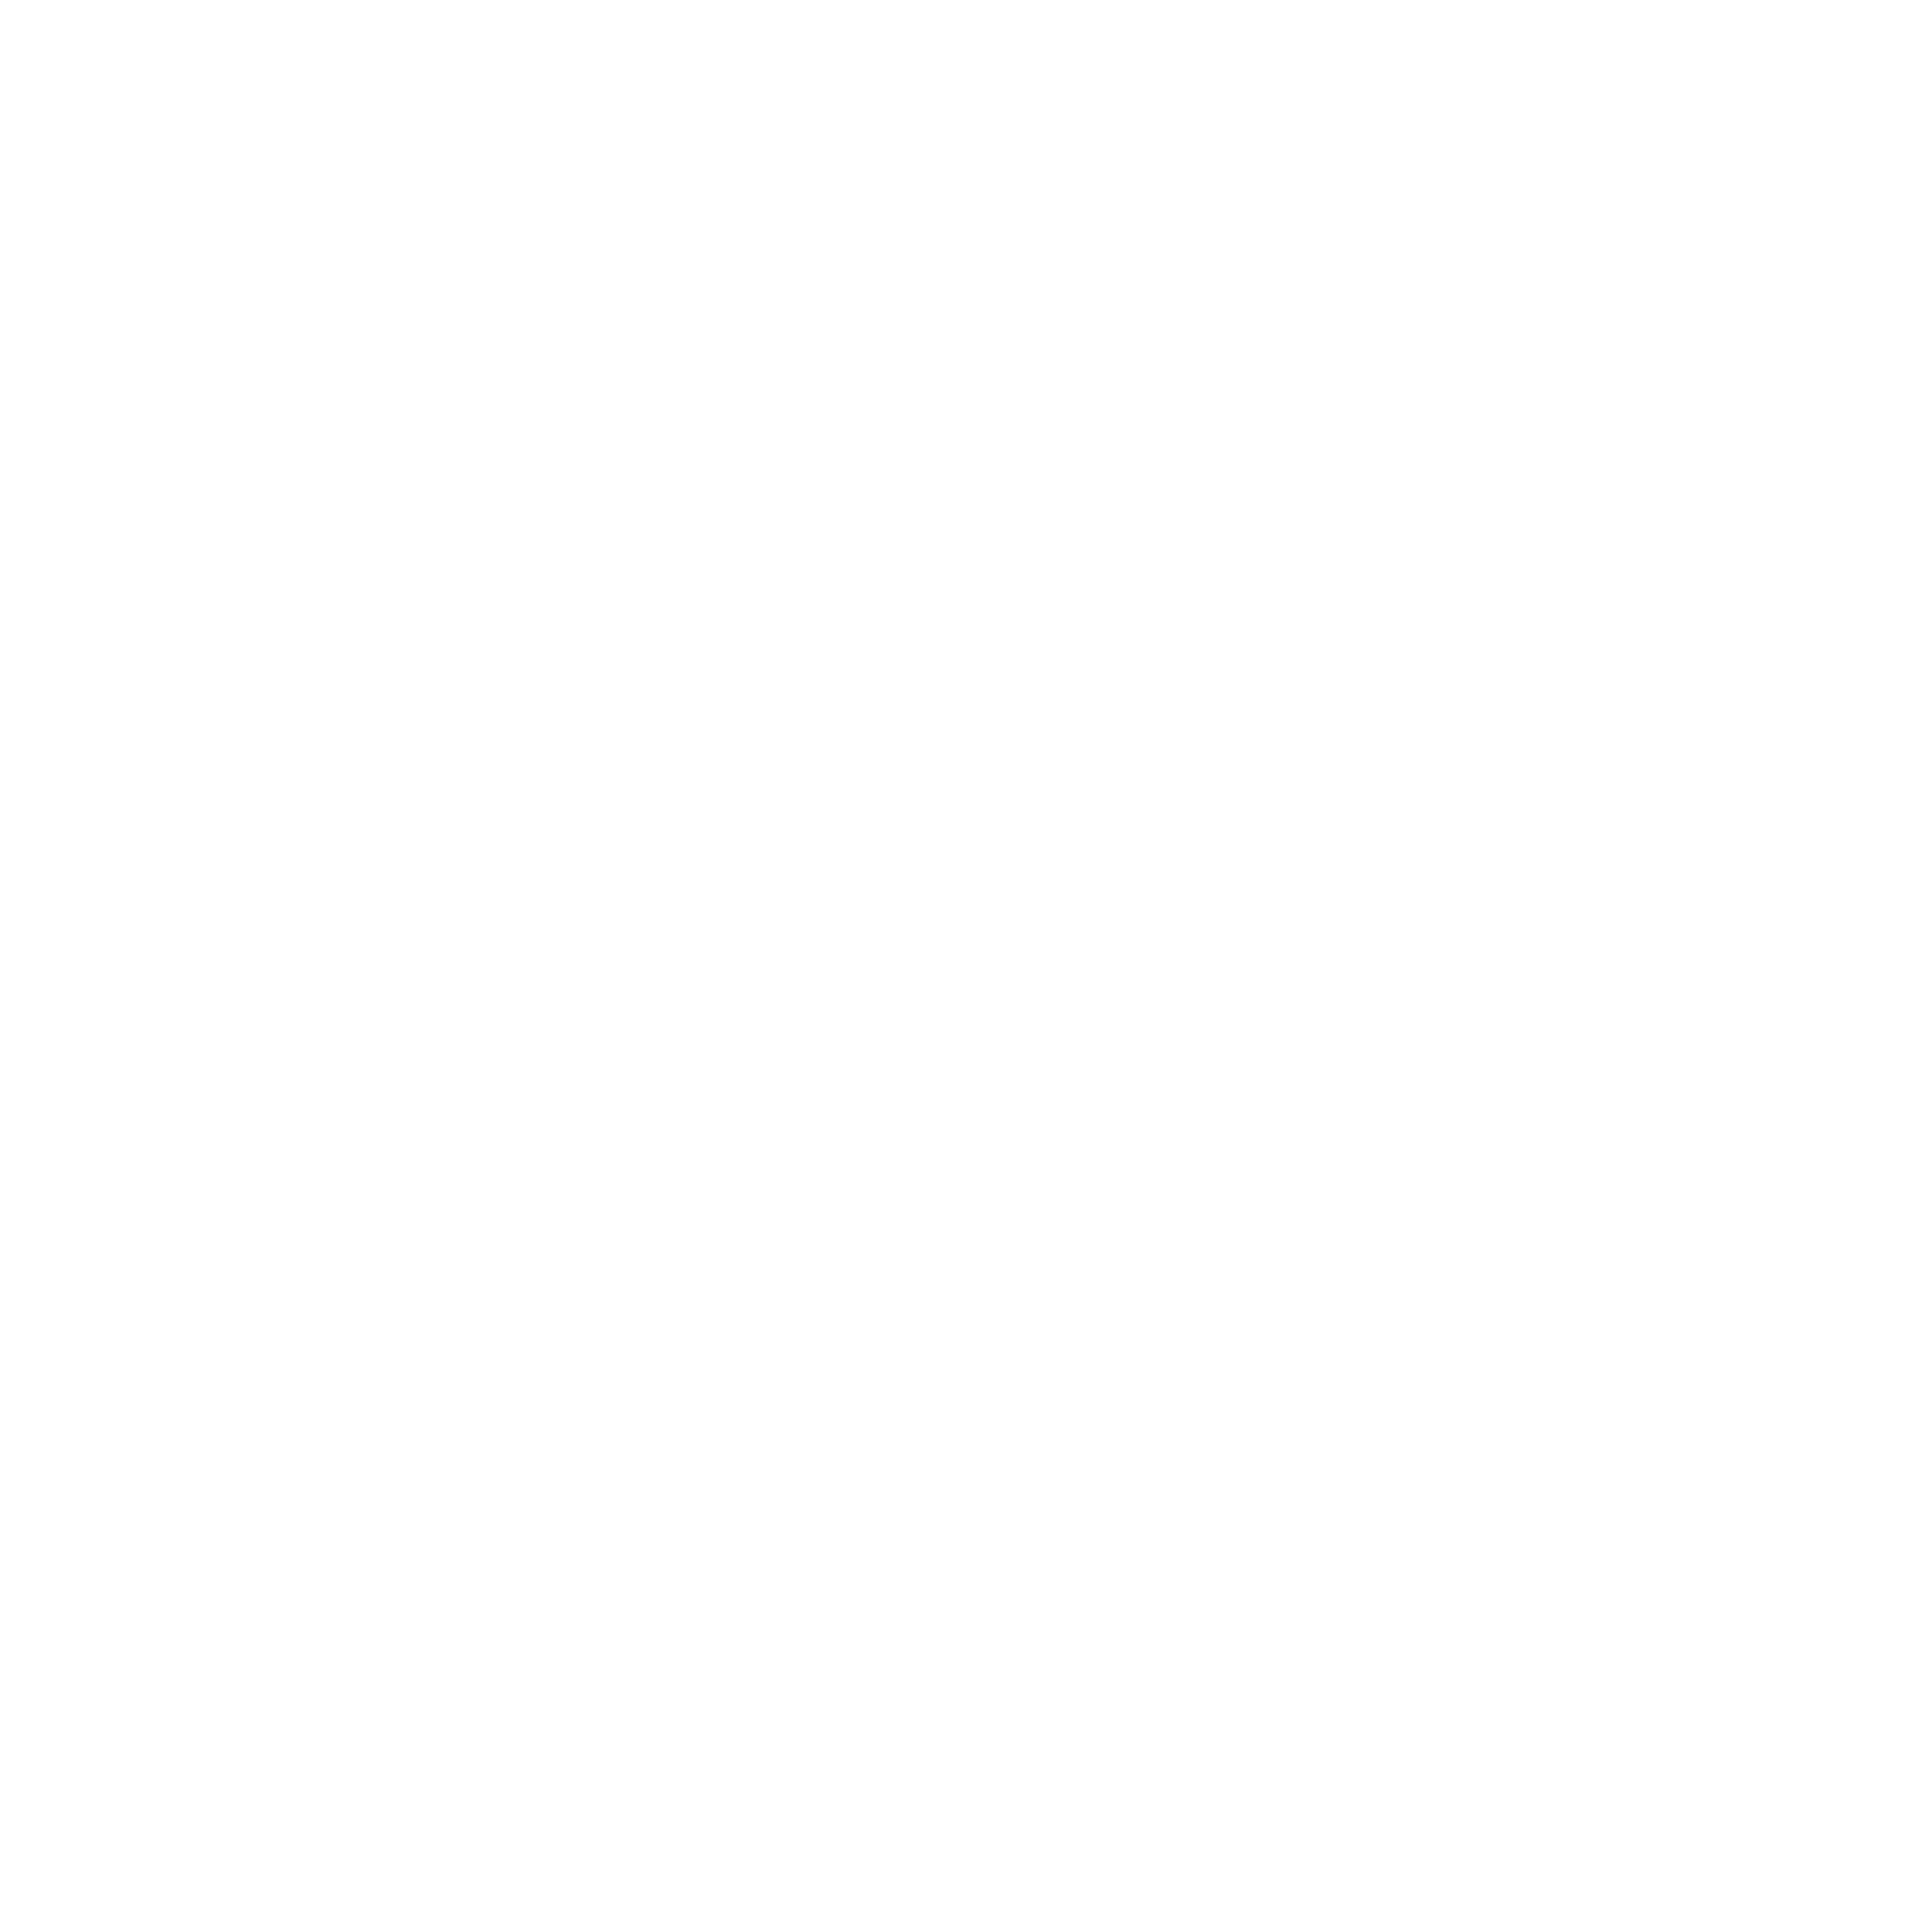 rs logo